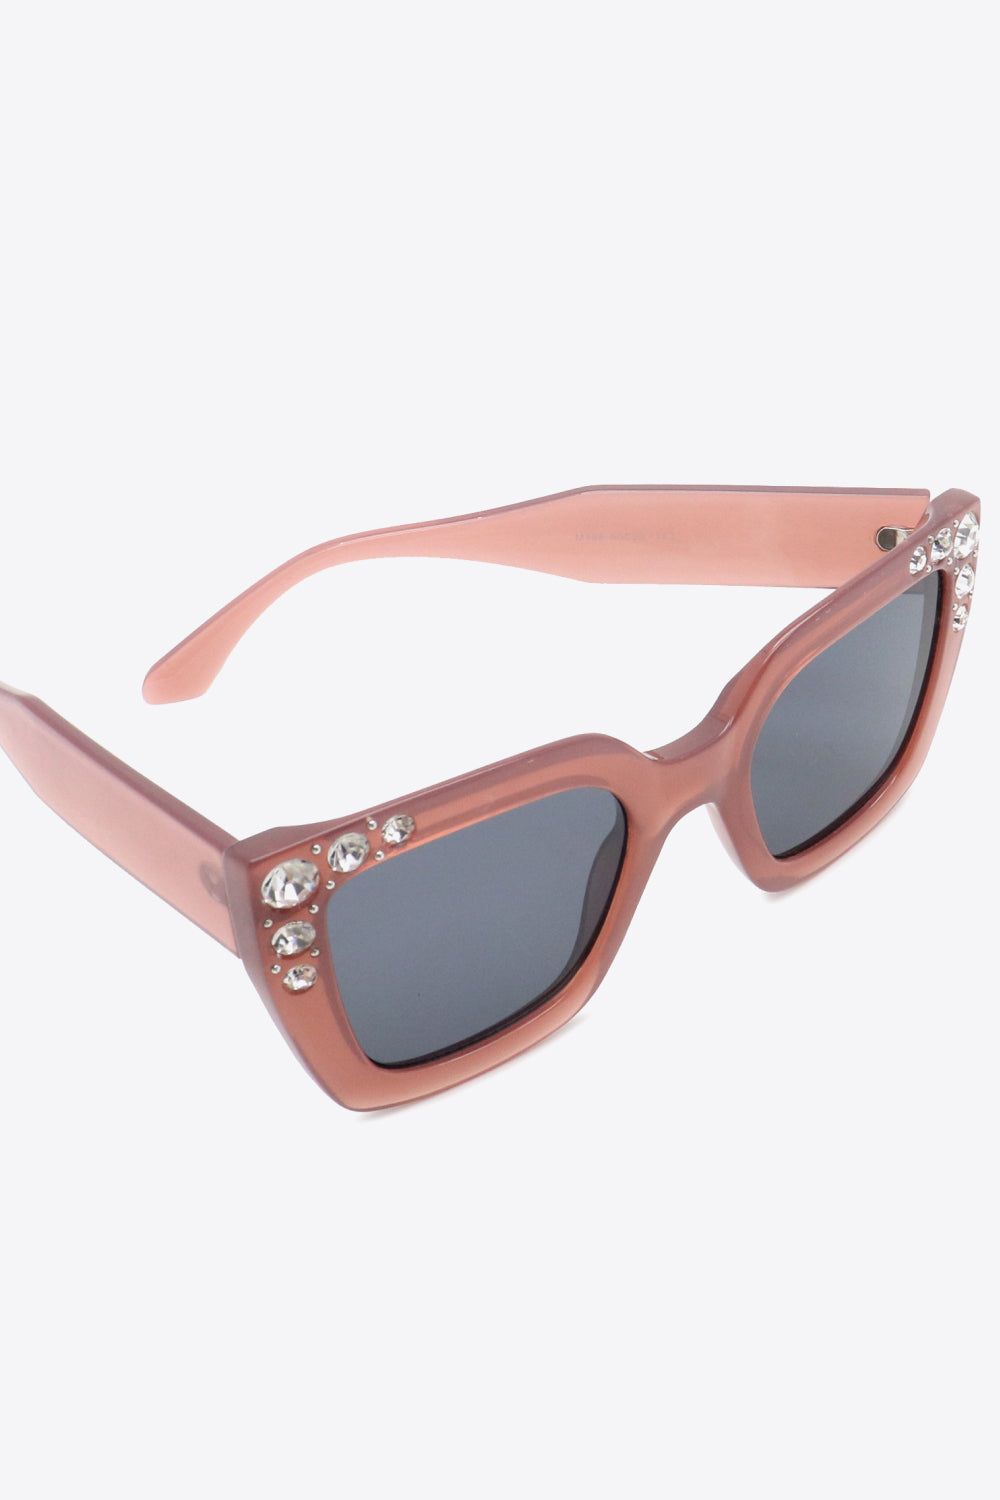 Inlaid Rhinestone Polycarbonate Sunglasses - Sunglasses - FITGGINS